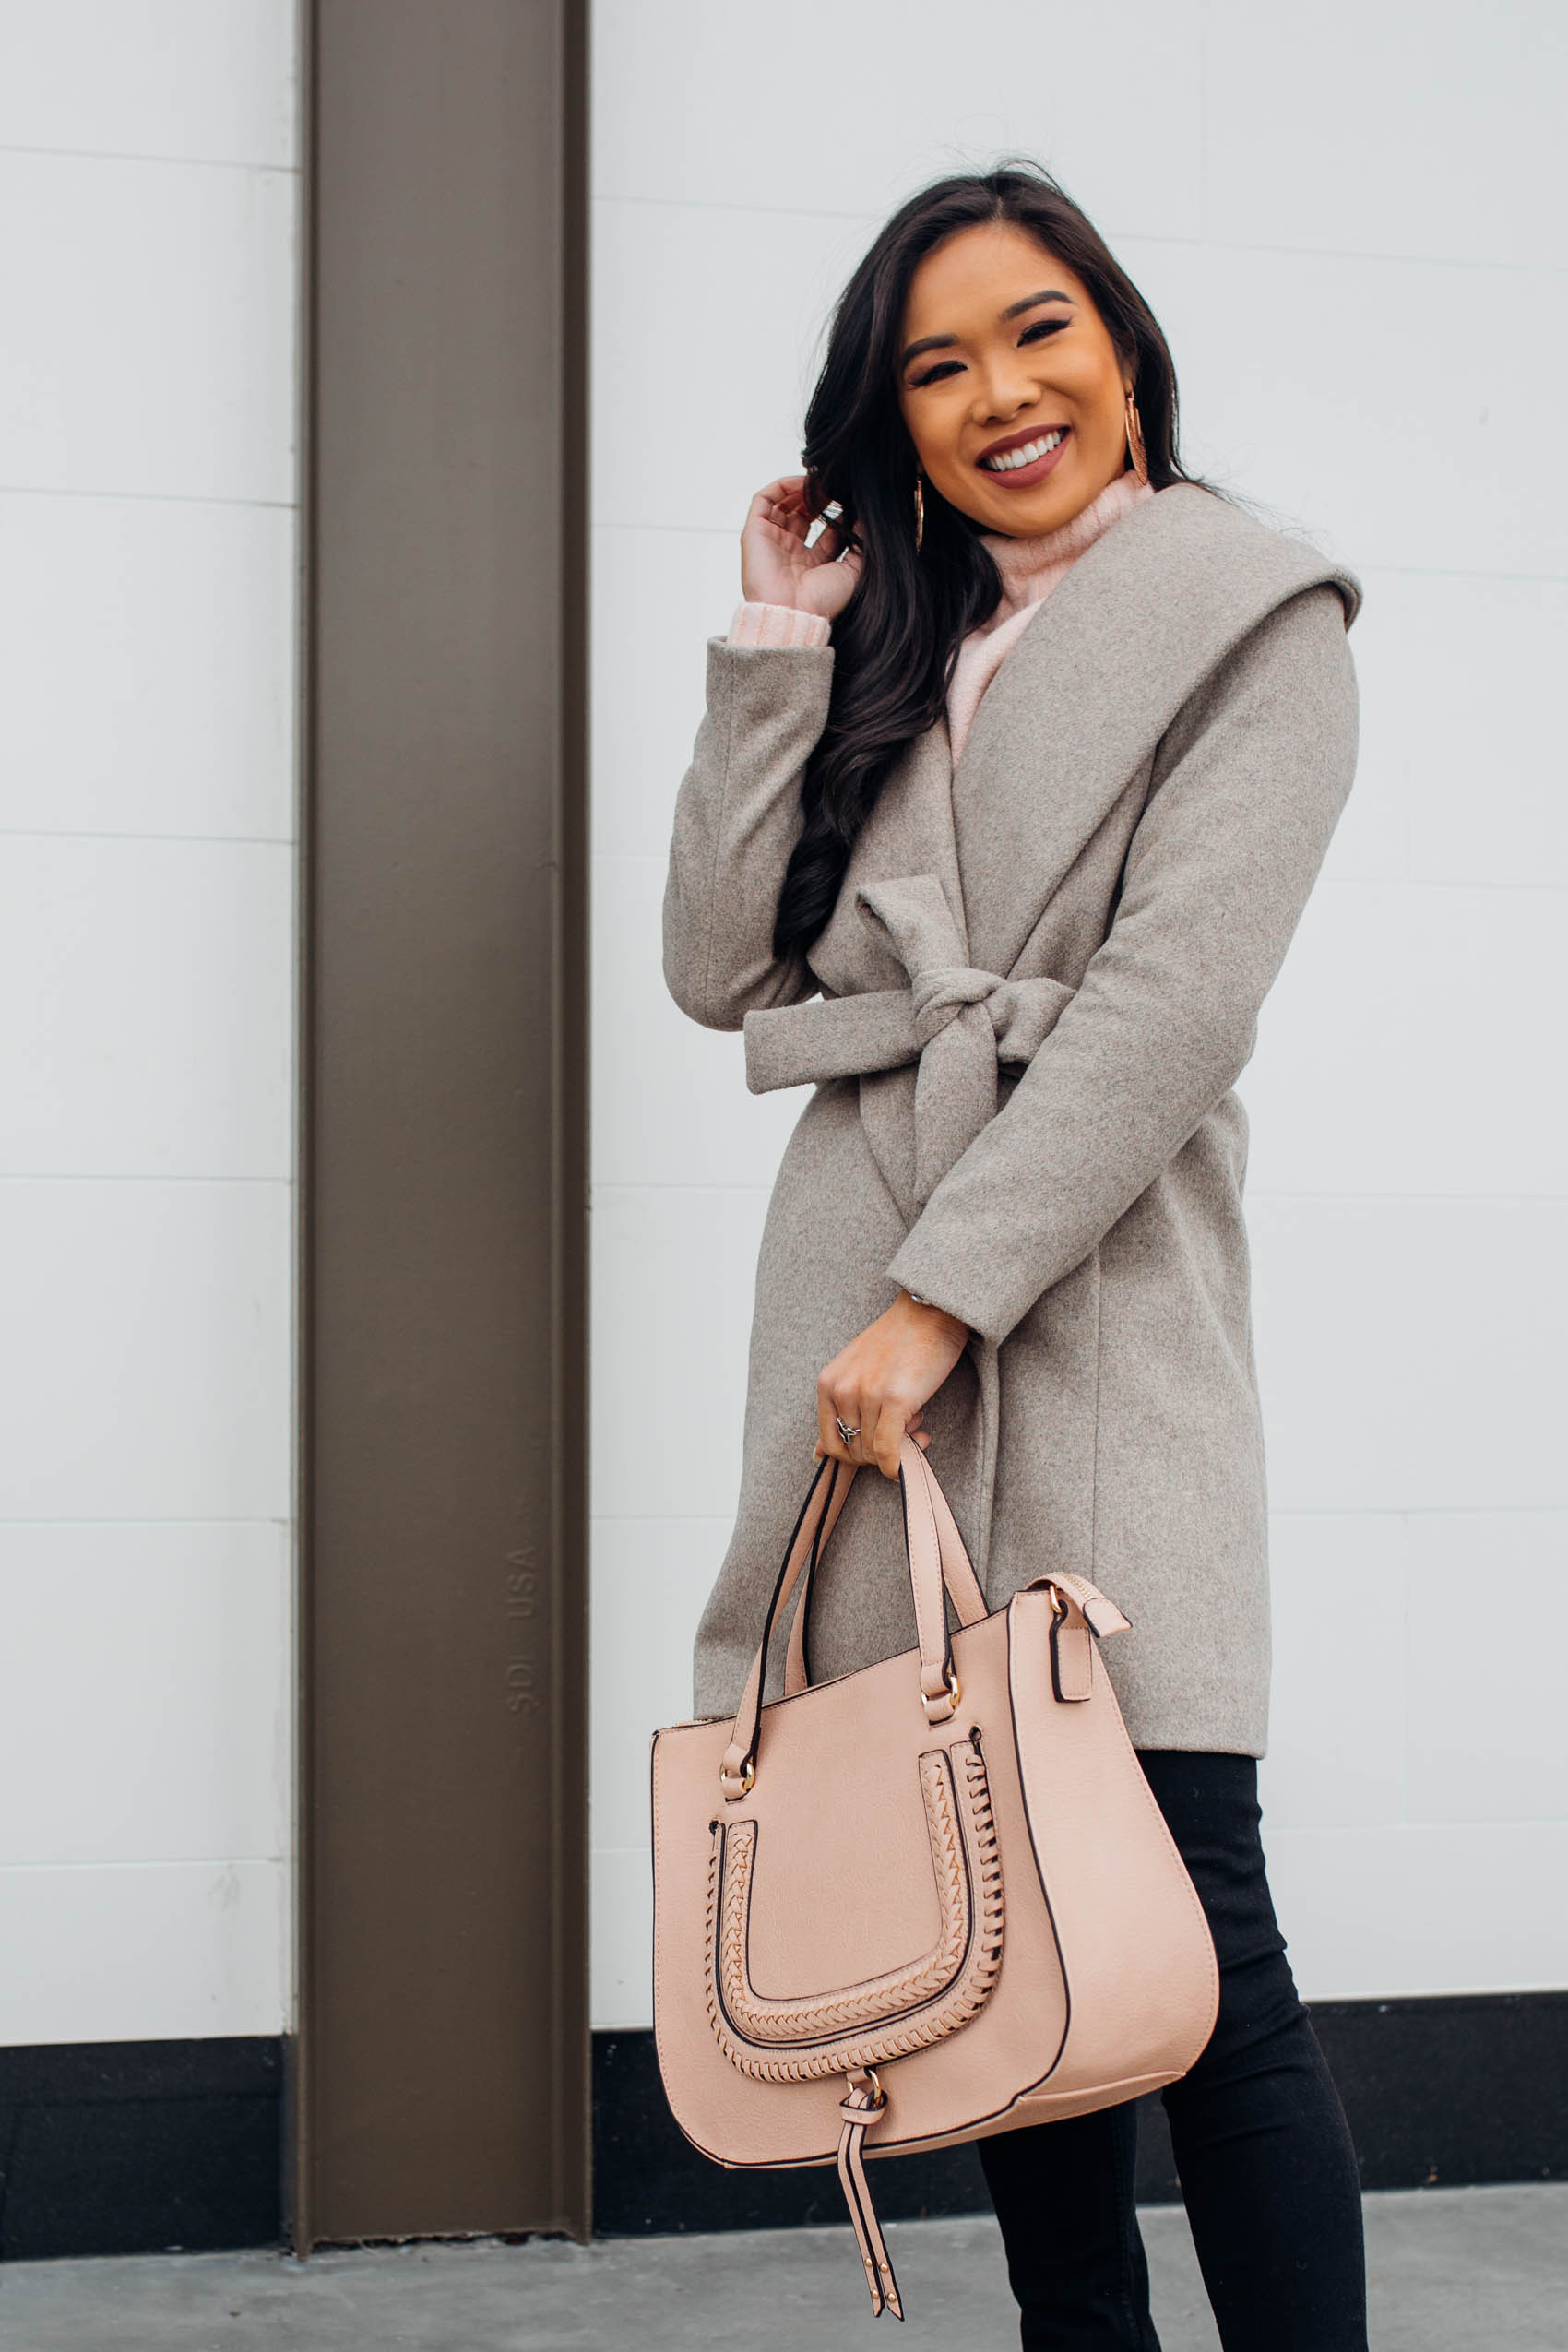 Blogger Hoang-Kim shares a winter outfit idea with a wool wrap coat and blush handbag